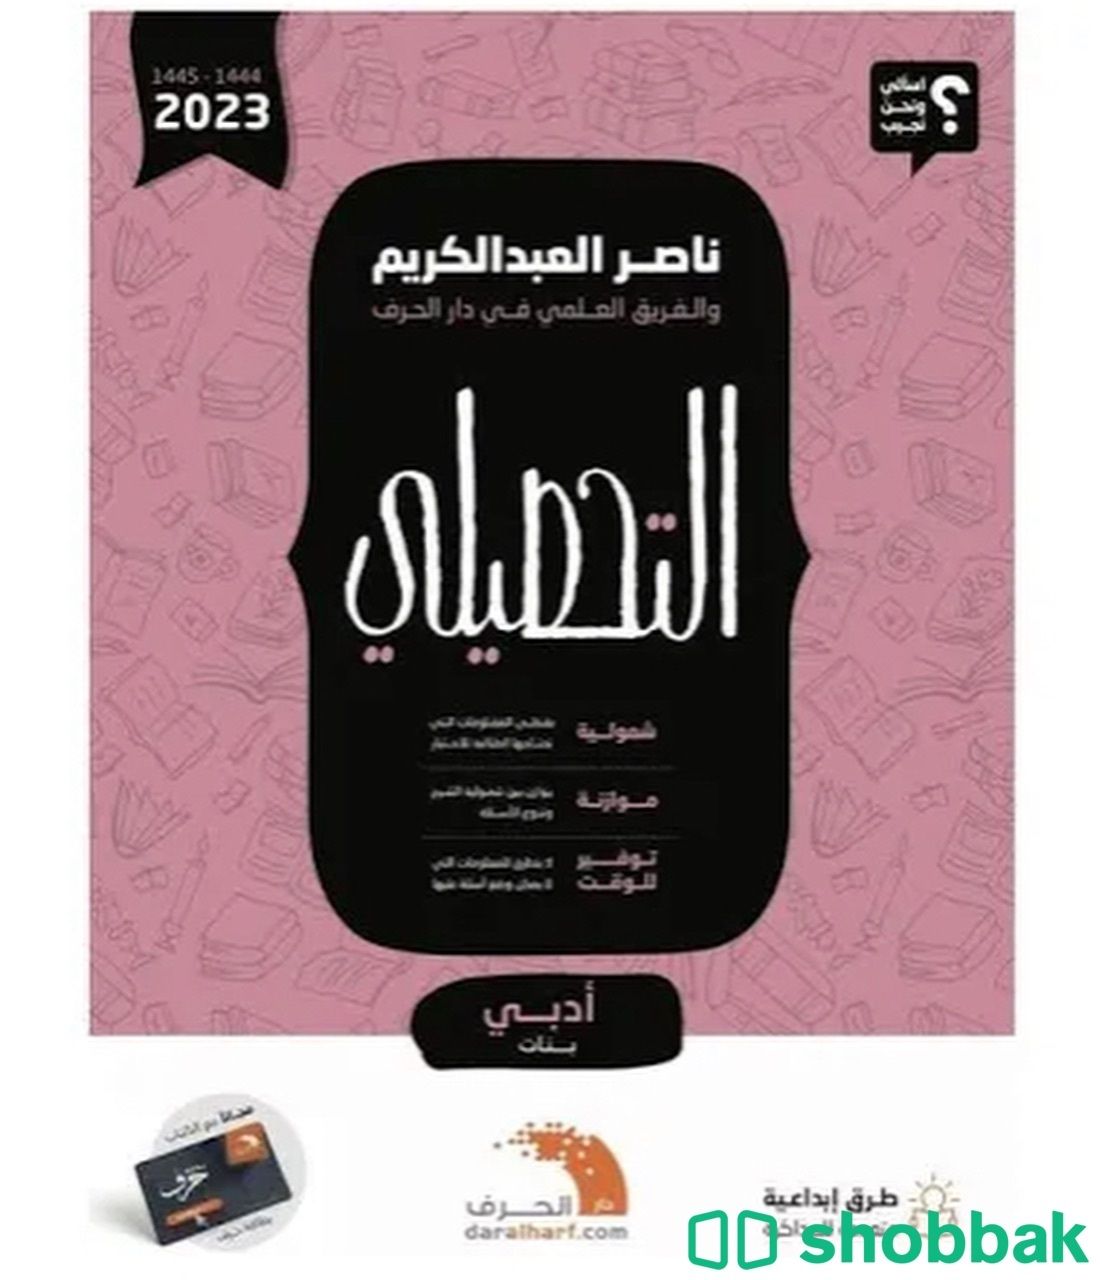 كتاب تحصيلي ادبي pdf نسخه 2023 Shobbak Saudi Arabia